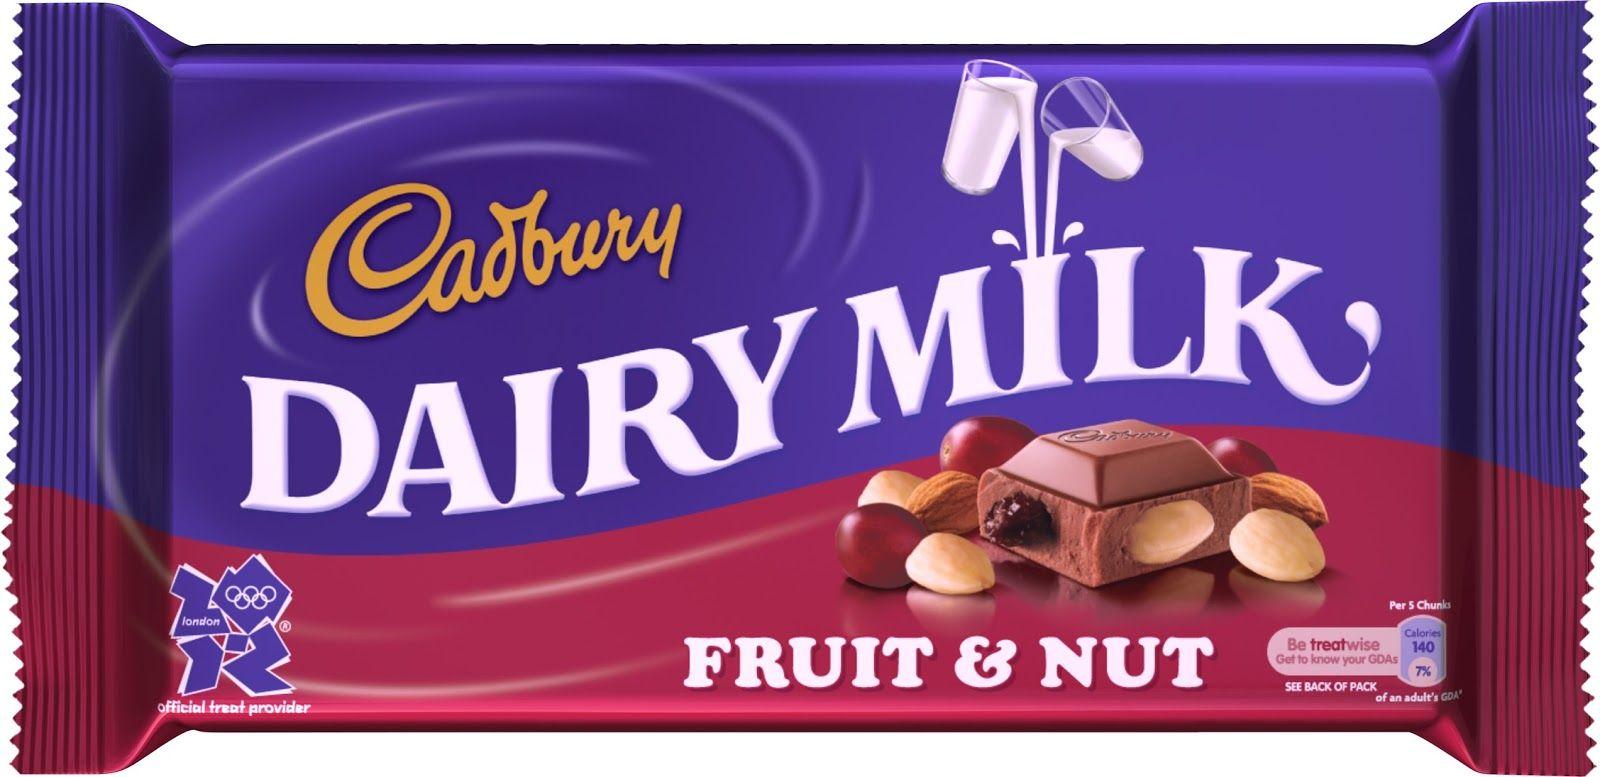 Cadbury Dairy Milk HD Wallpaper HD wallpaperdownload